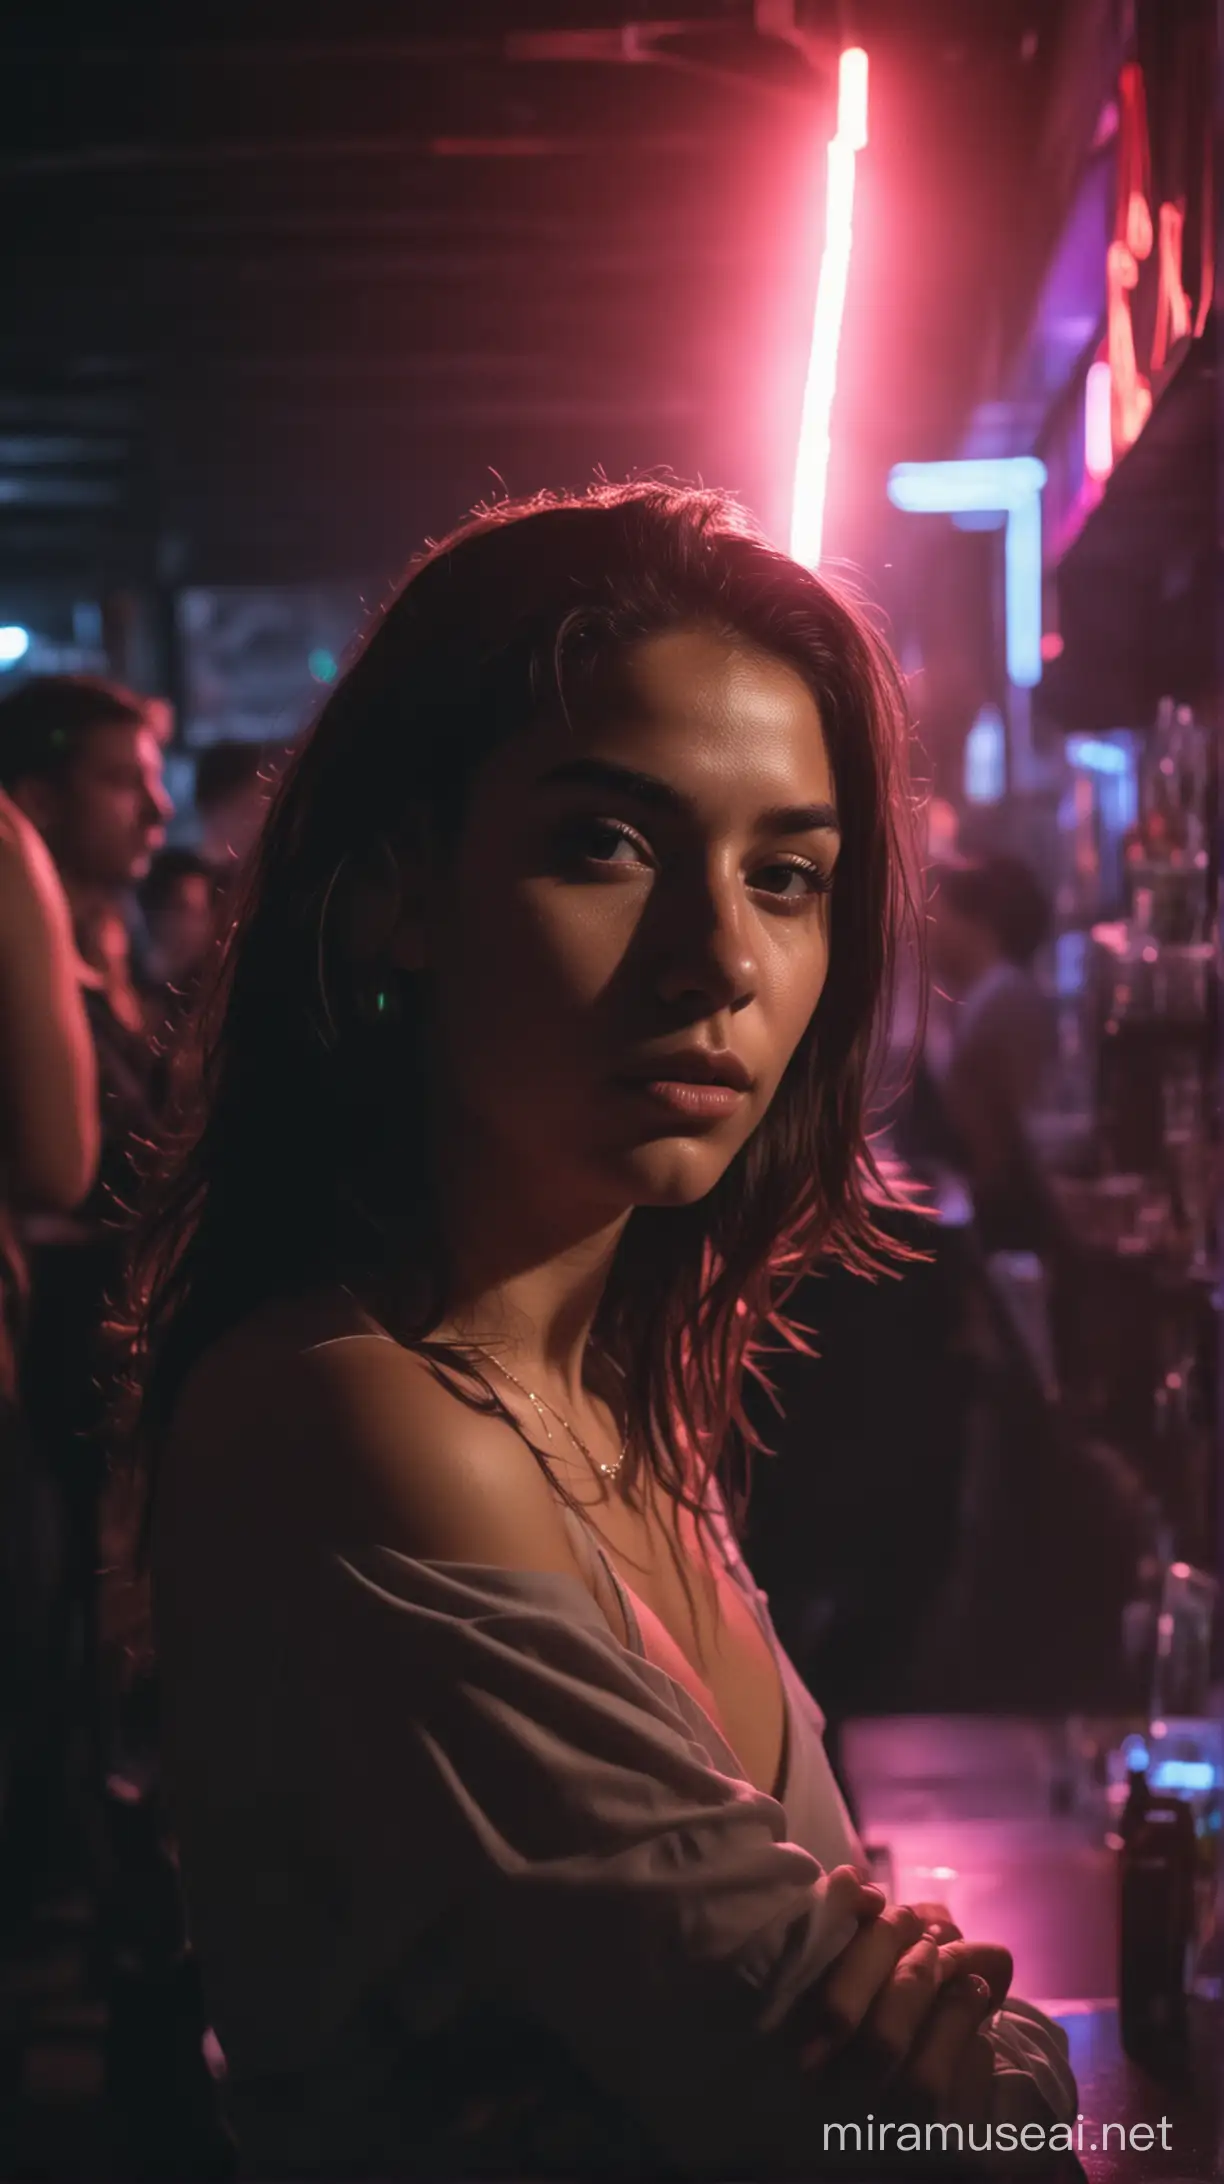 Latina Woman in Neonlit Crowded Bar